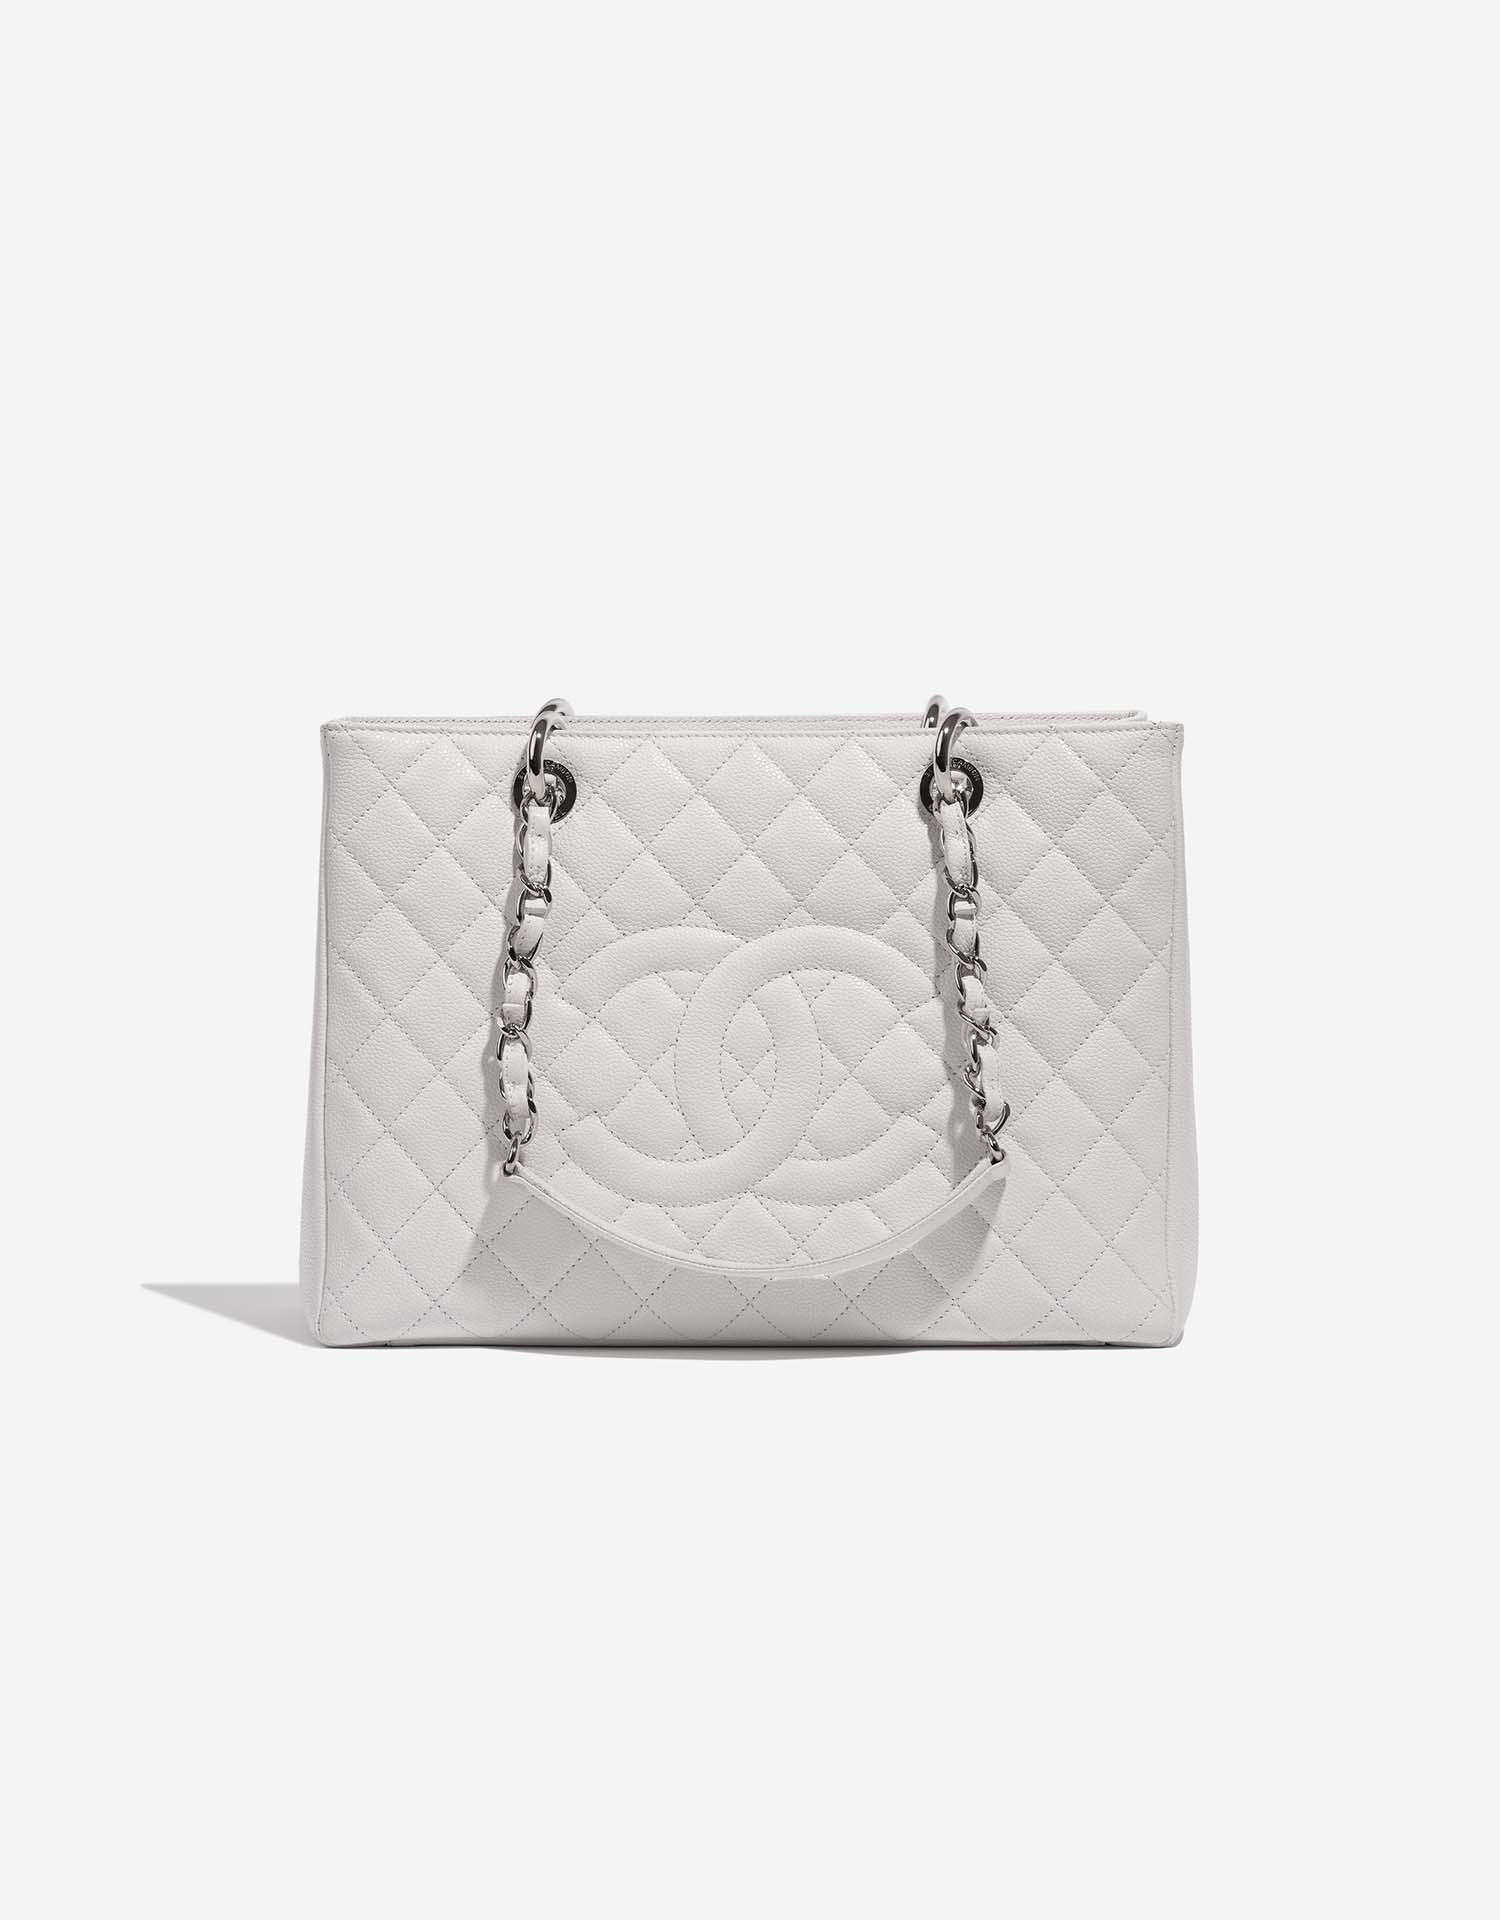 Chanel Shopping Tote GST Caviar White | SACLÀB